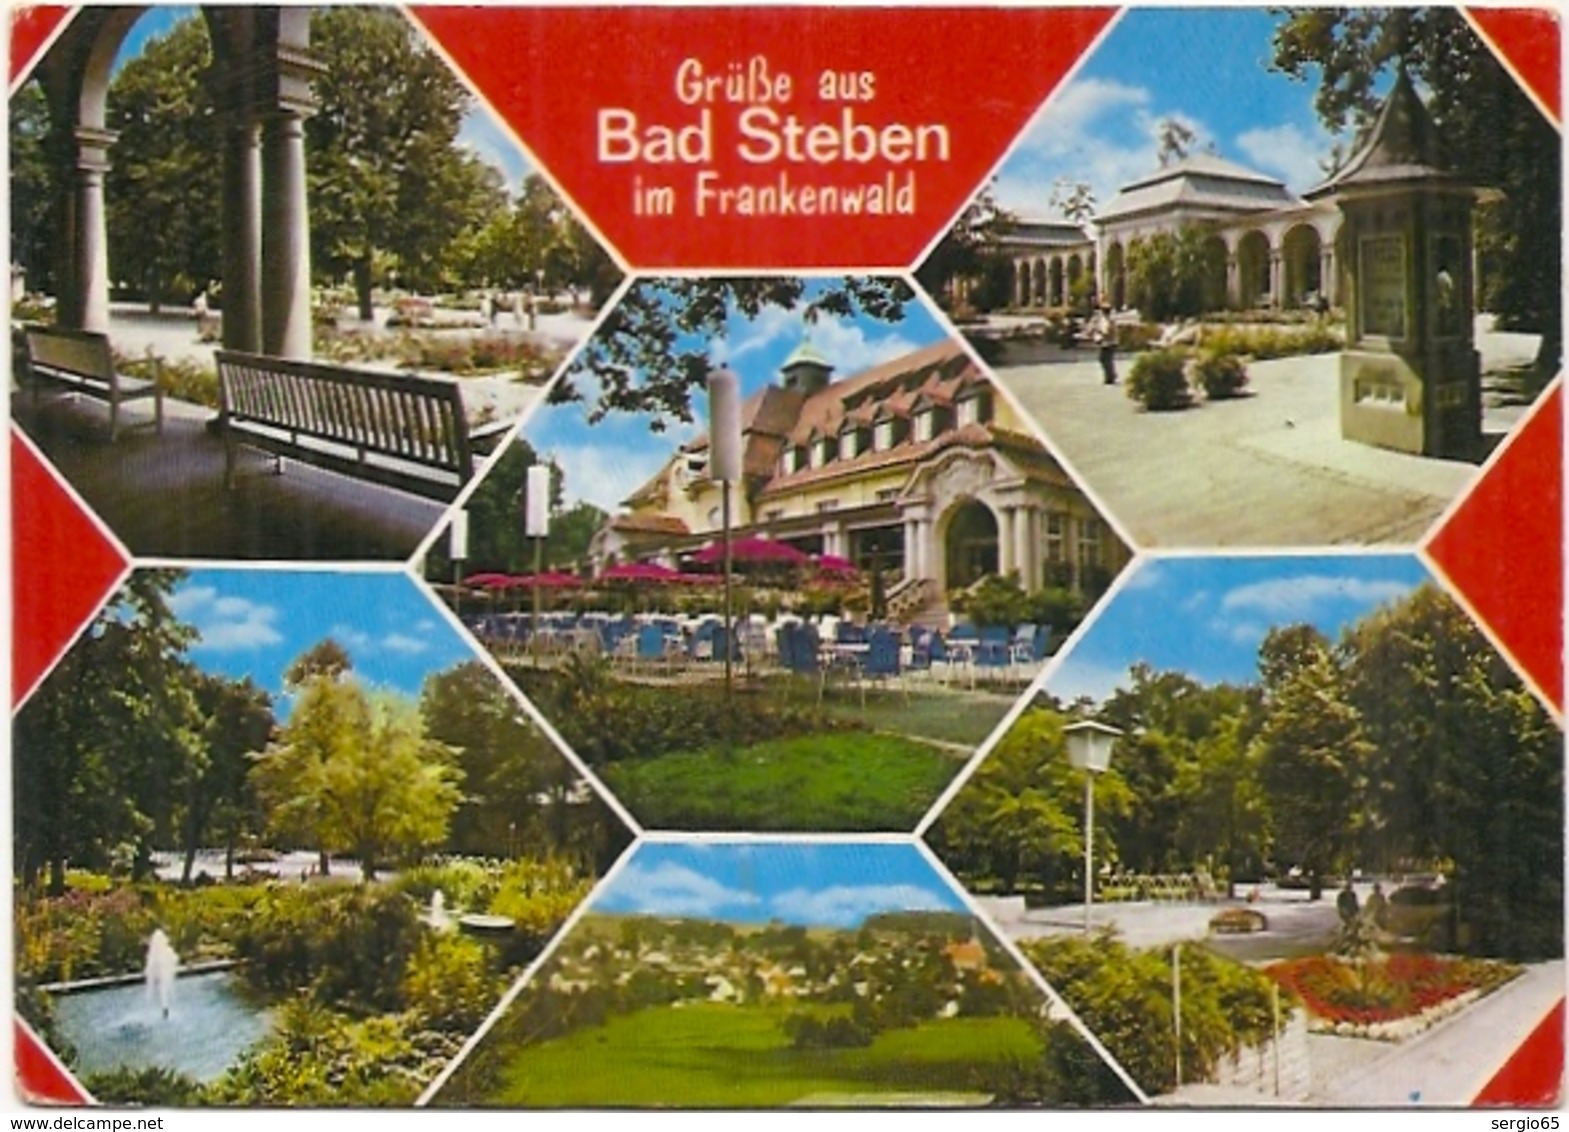 Bad Steben-traveled - Bad Steben